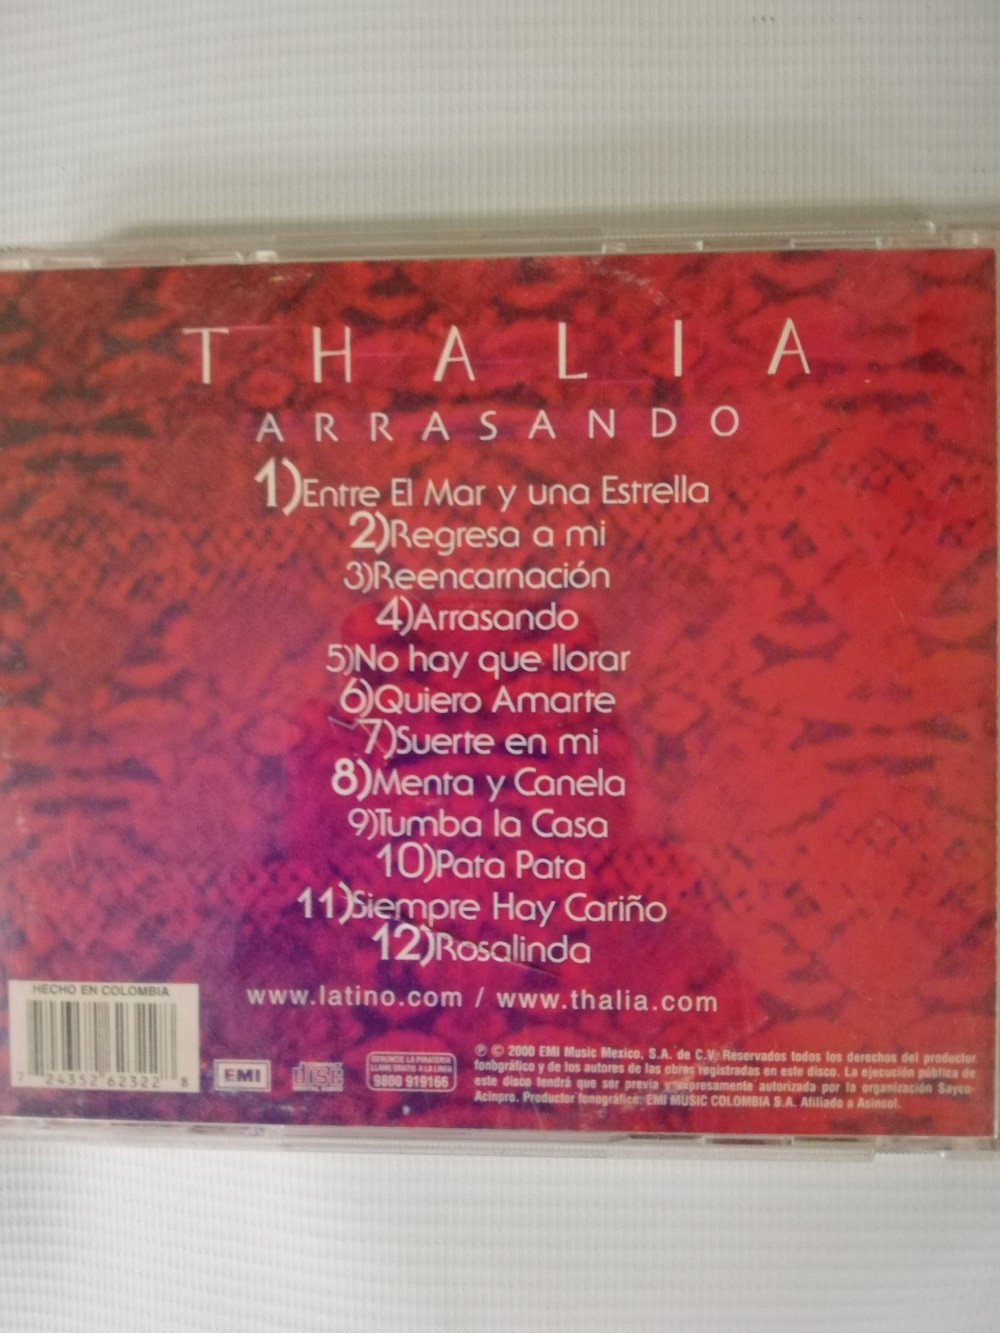 Imagen CD THALIA - ARRASANDO 2